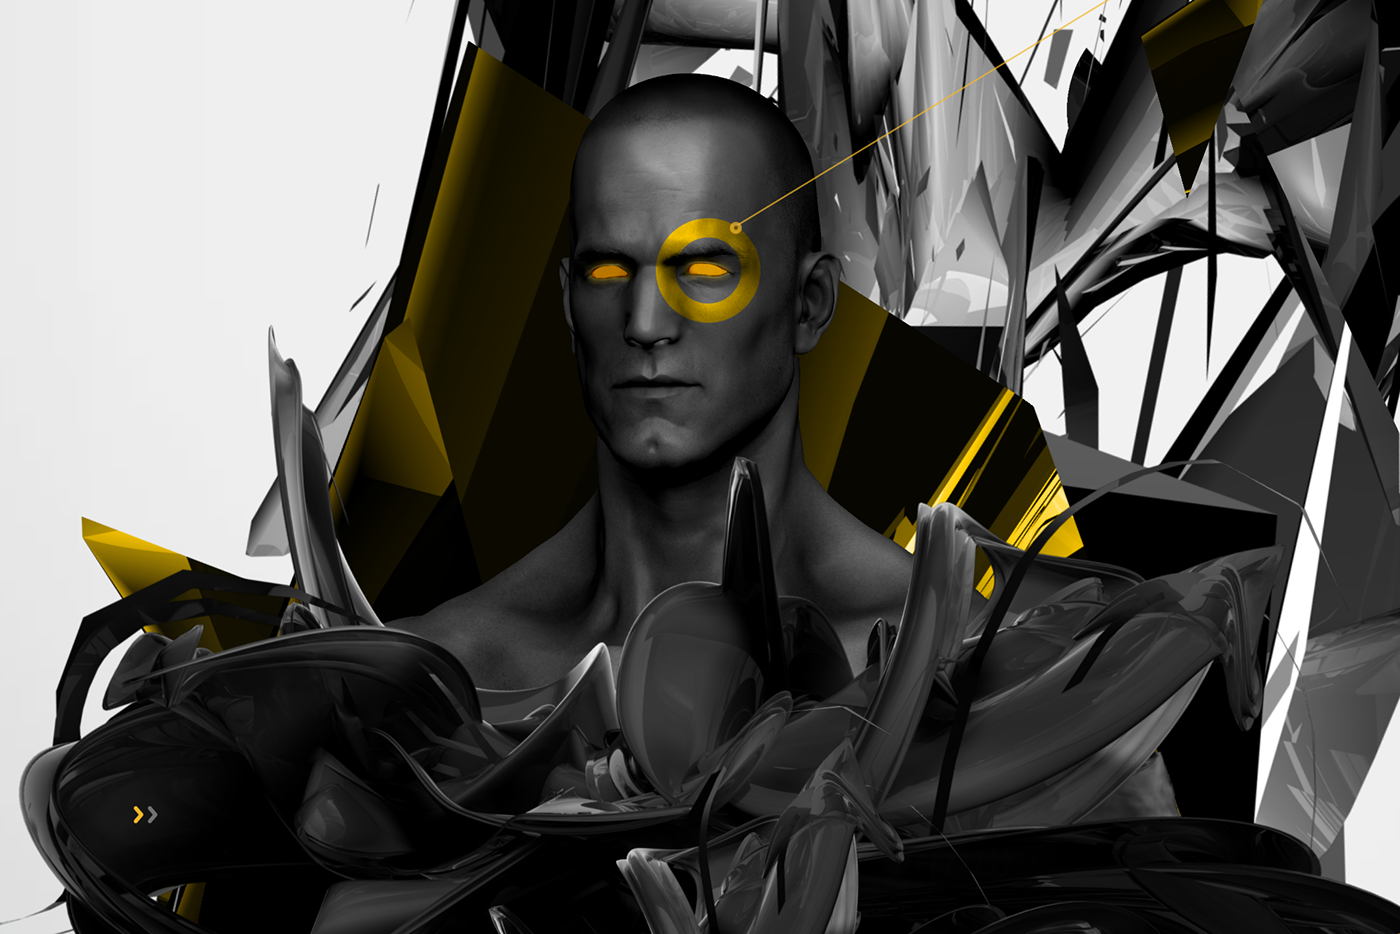 digital illustration area surrealism abstract Renders Poser 3D Human Beyond DAWID CMOK man